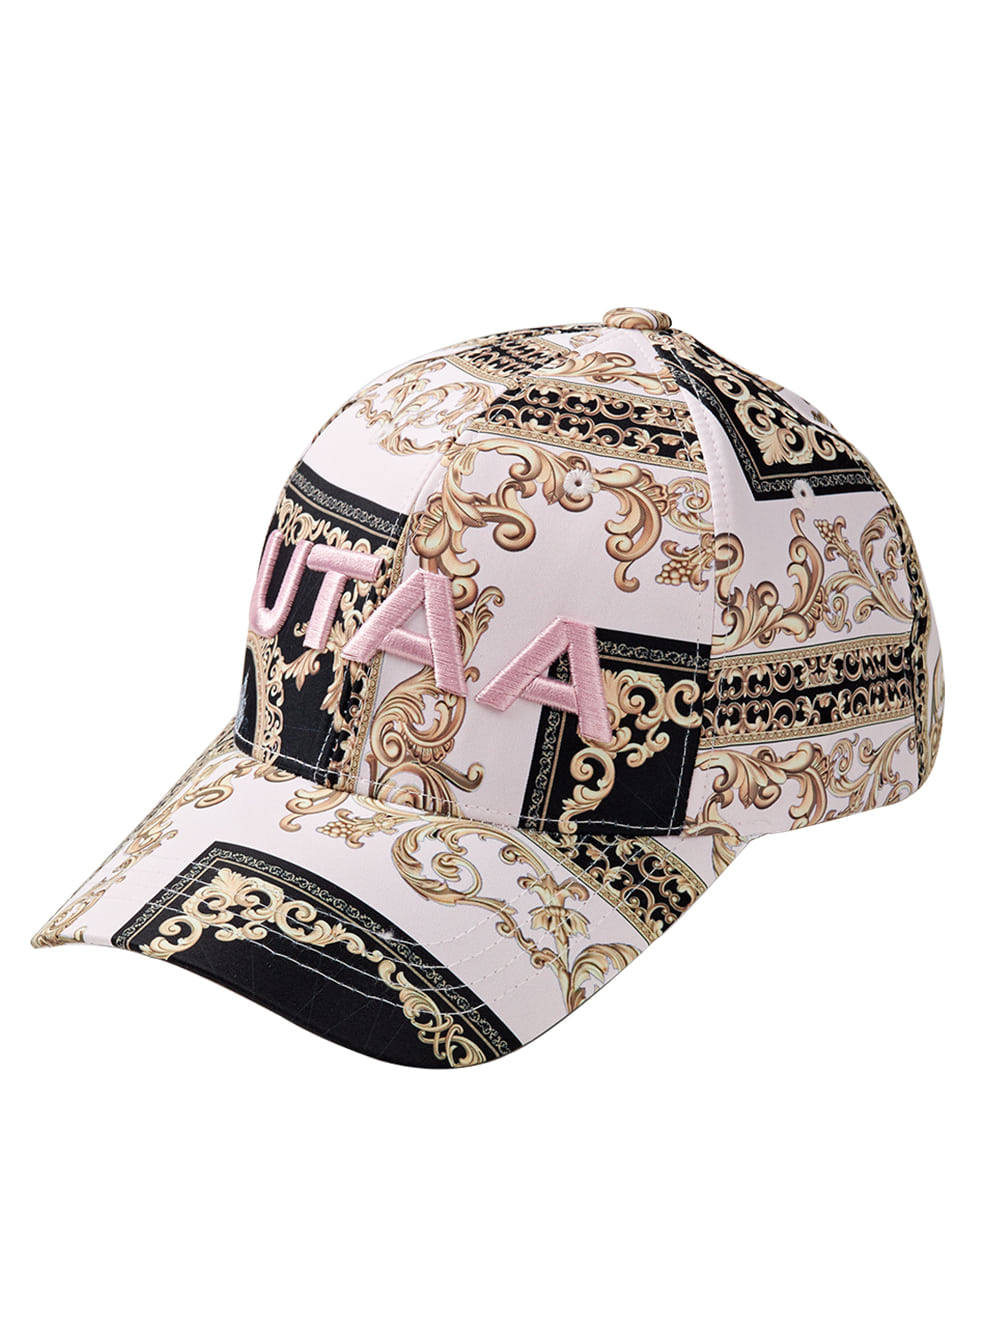 UTAA Baroque Golf Cap : Pink  (UC0GCU110PK)